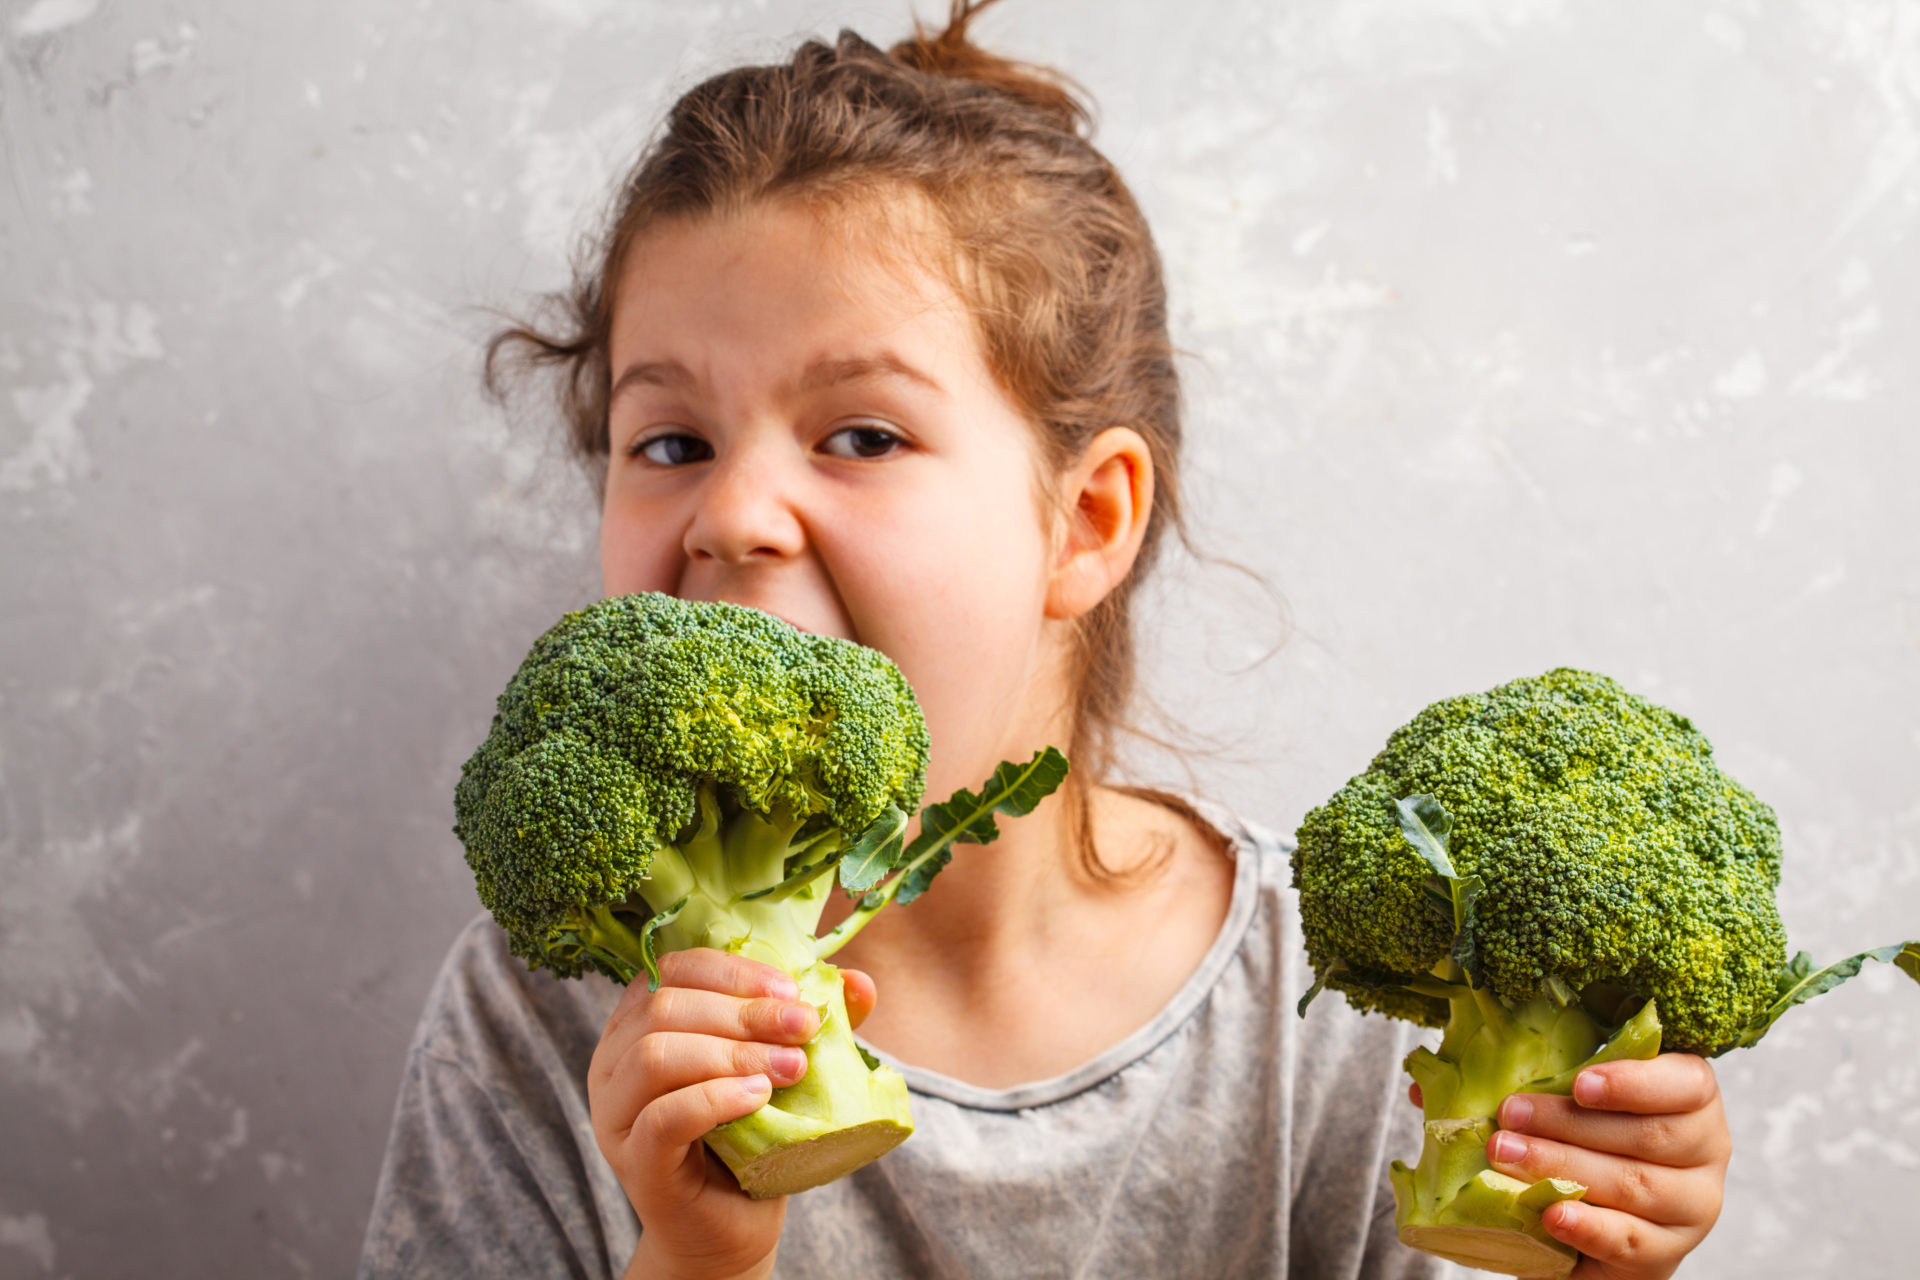 A young girl eating broccoli. 